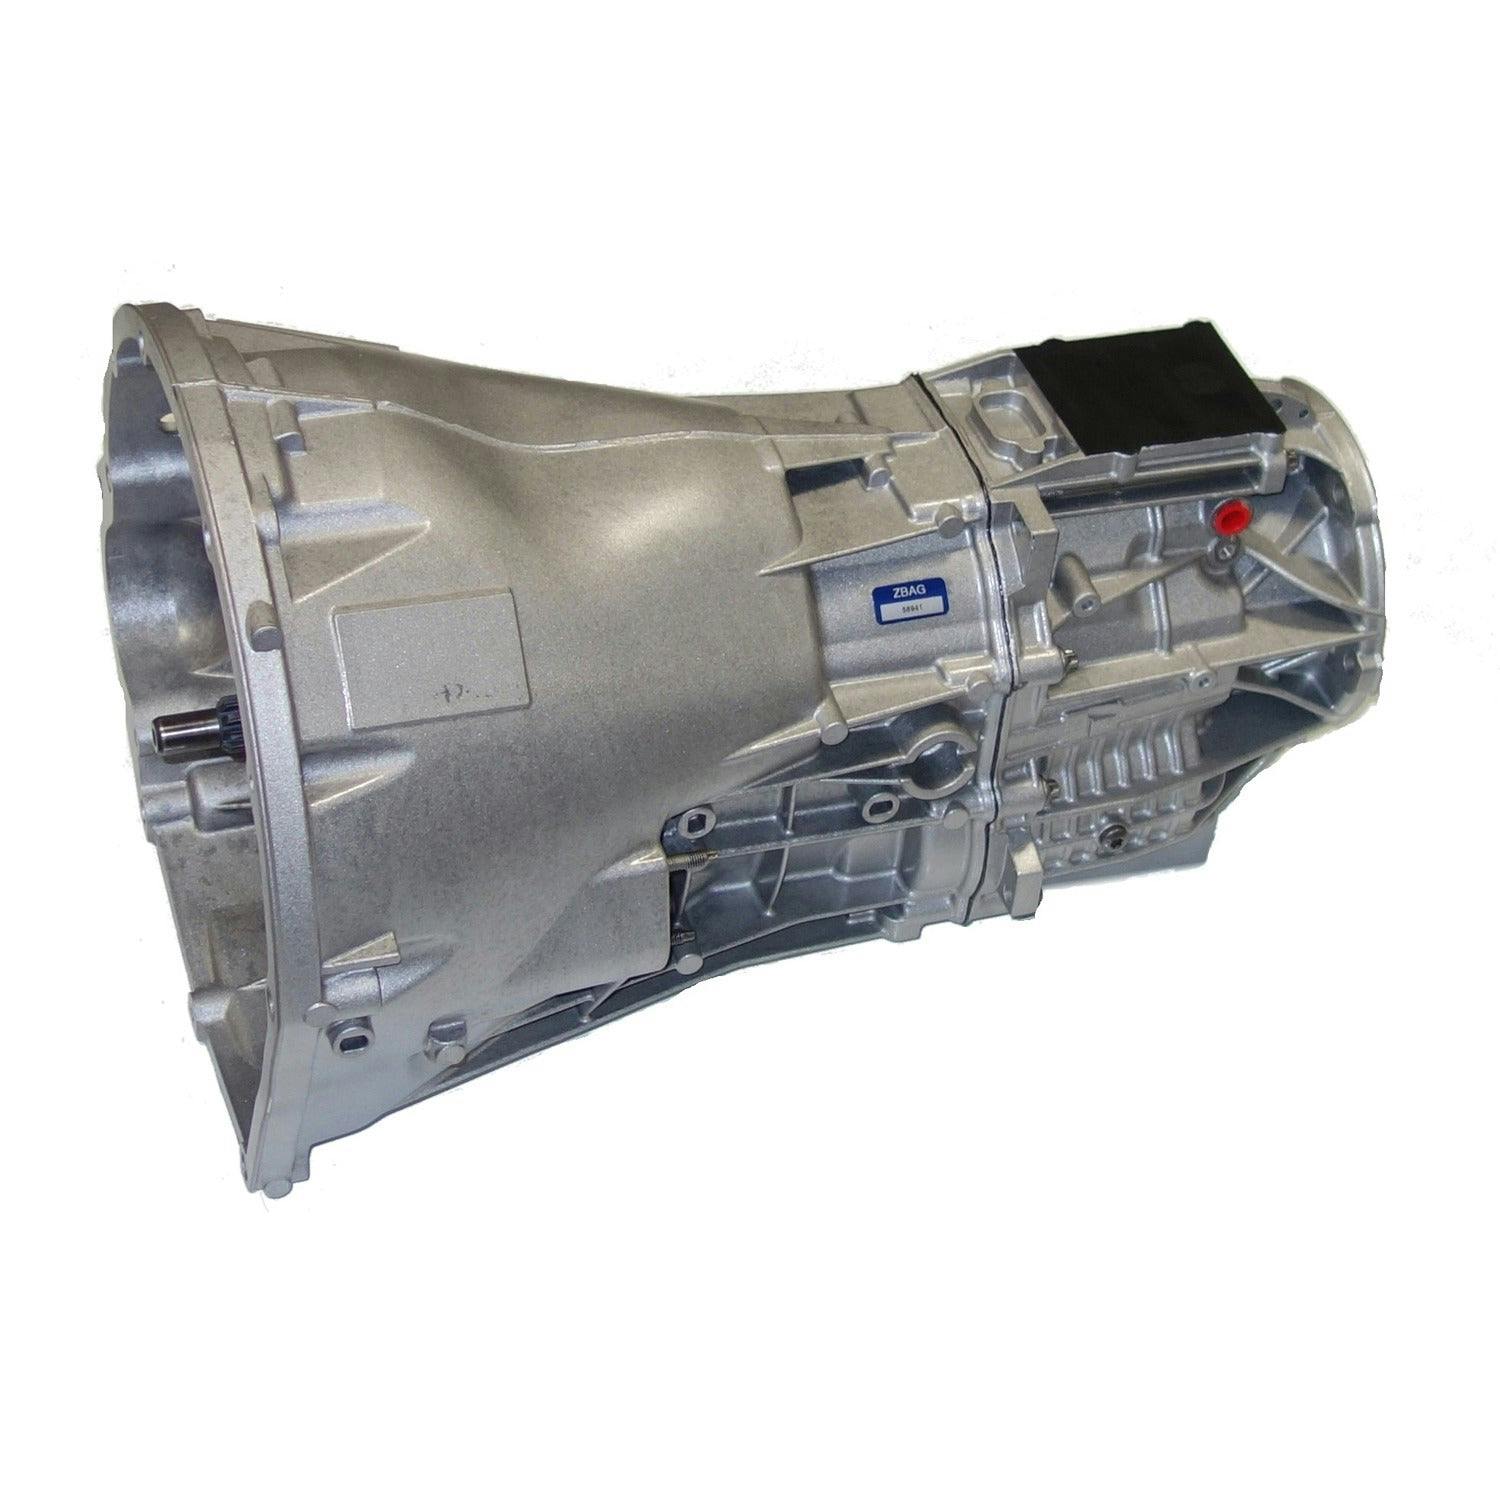 Manual Transmission for 2004-2008 Chrysler Crossfire RWD with 3.2L V6 Engine